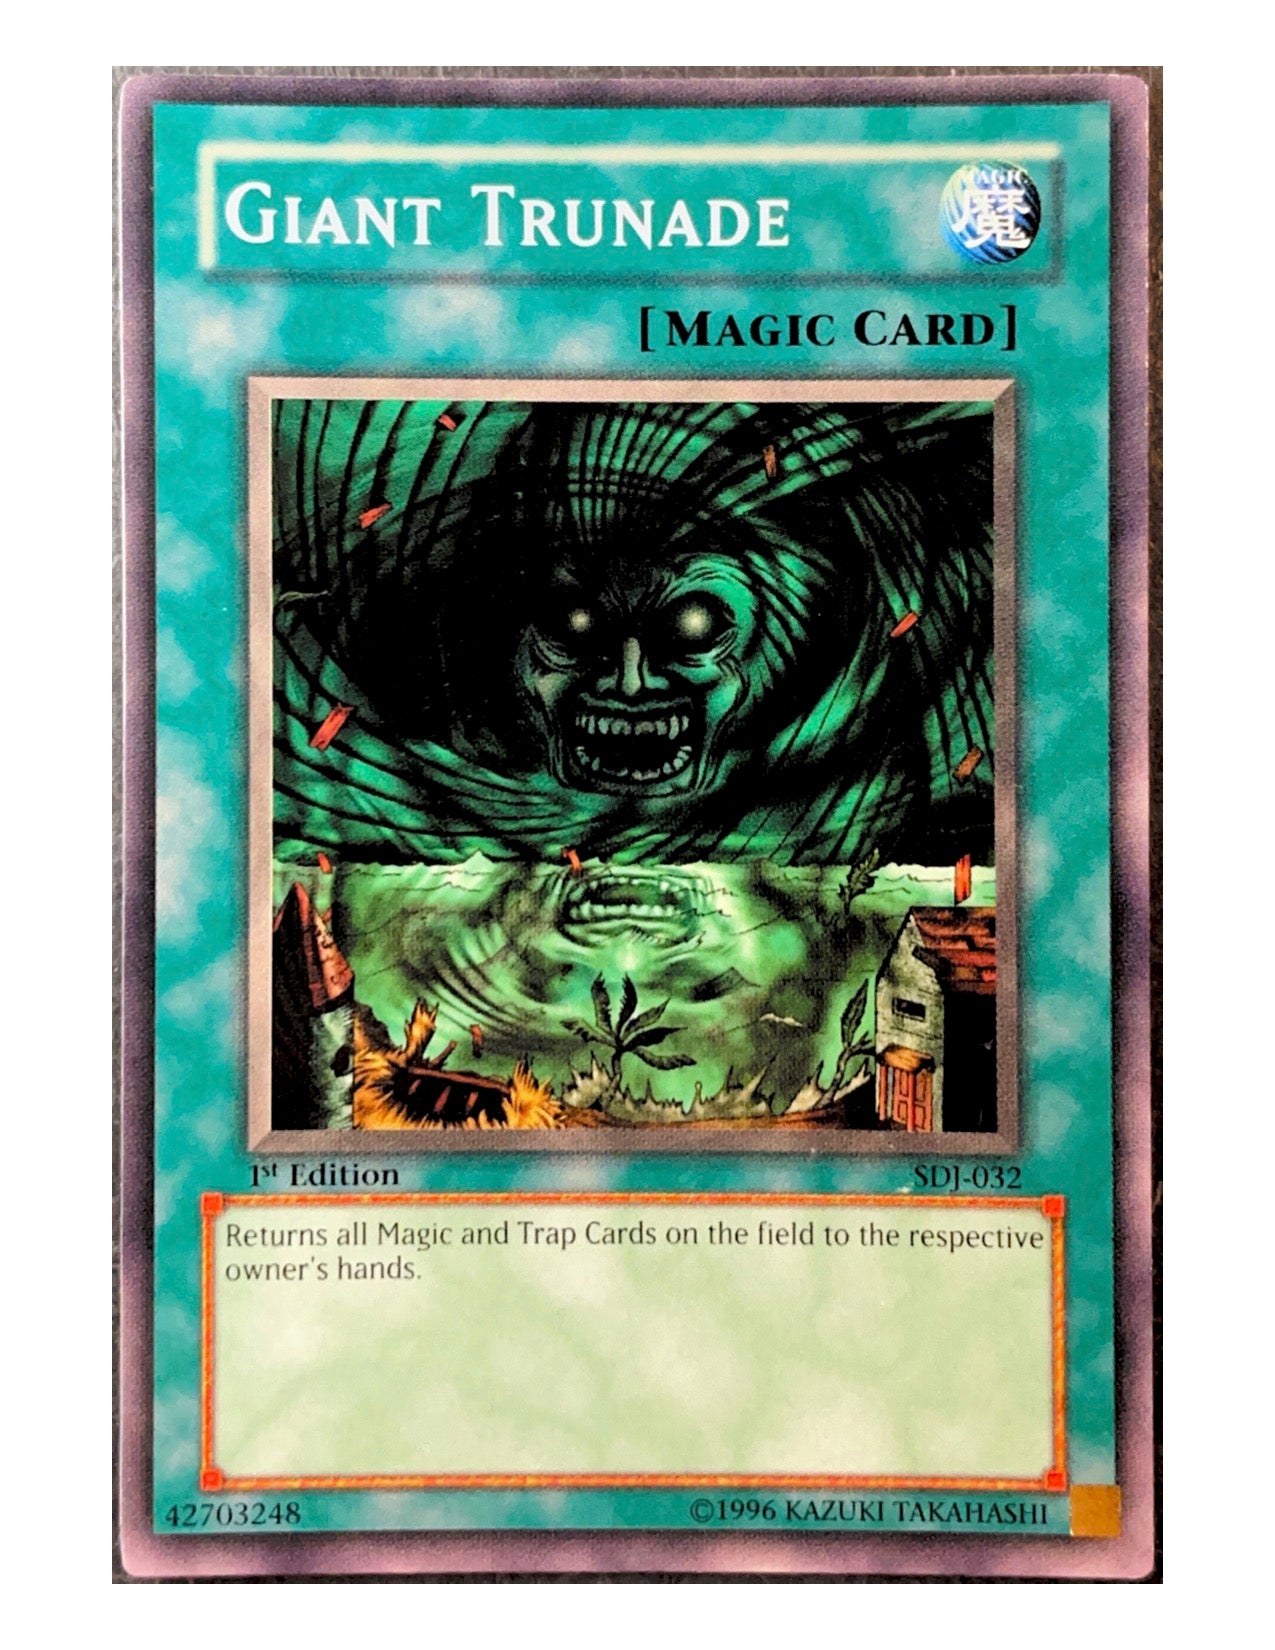 Giant Trunade SDJ-032 Common - 1st Edition